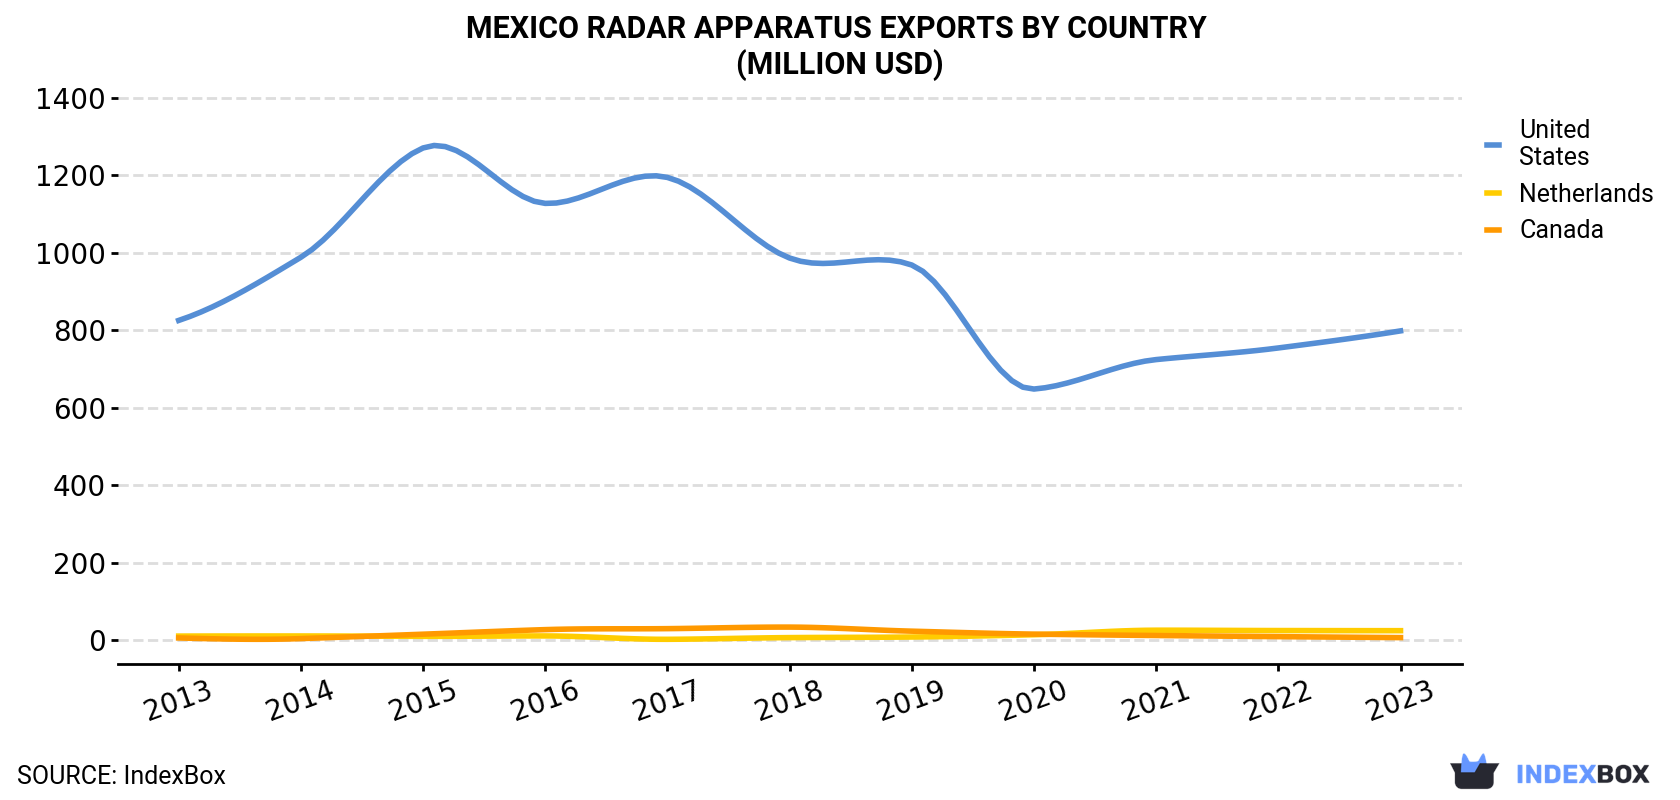 Mexico Radar Apparatus Exports By Country (Million USD)